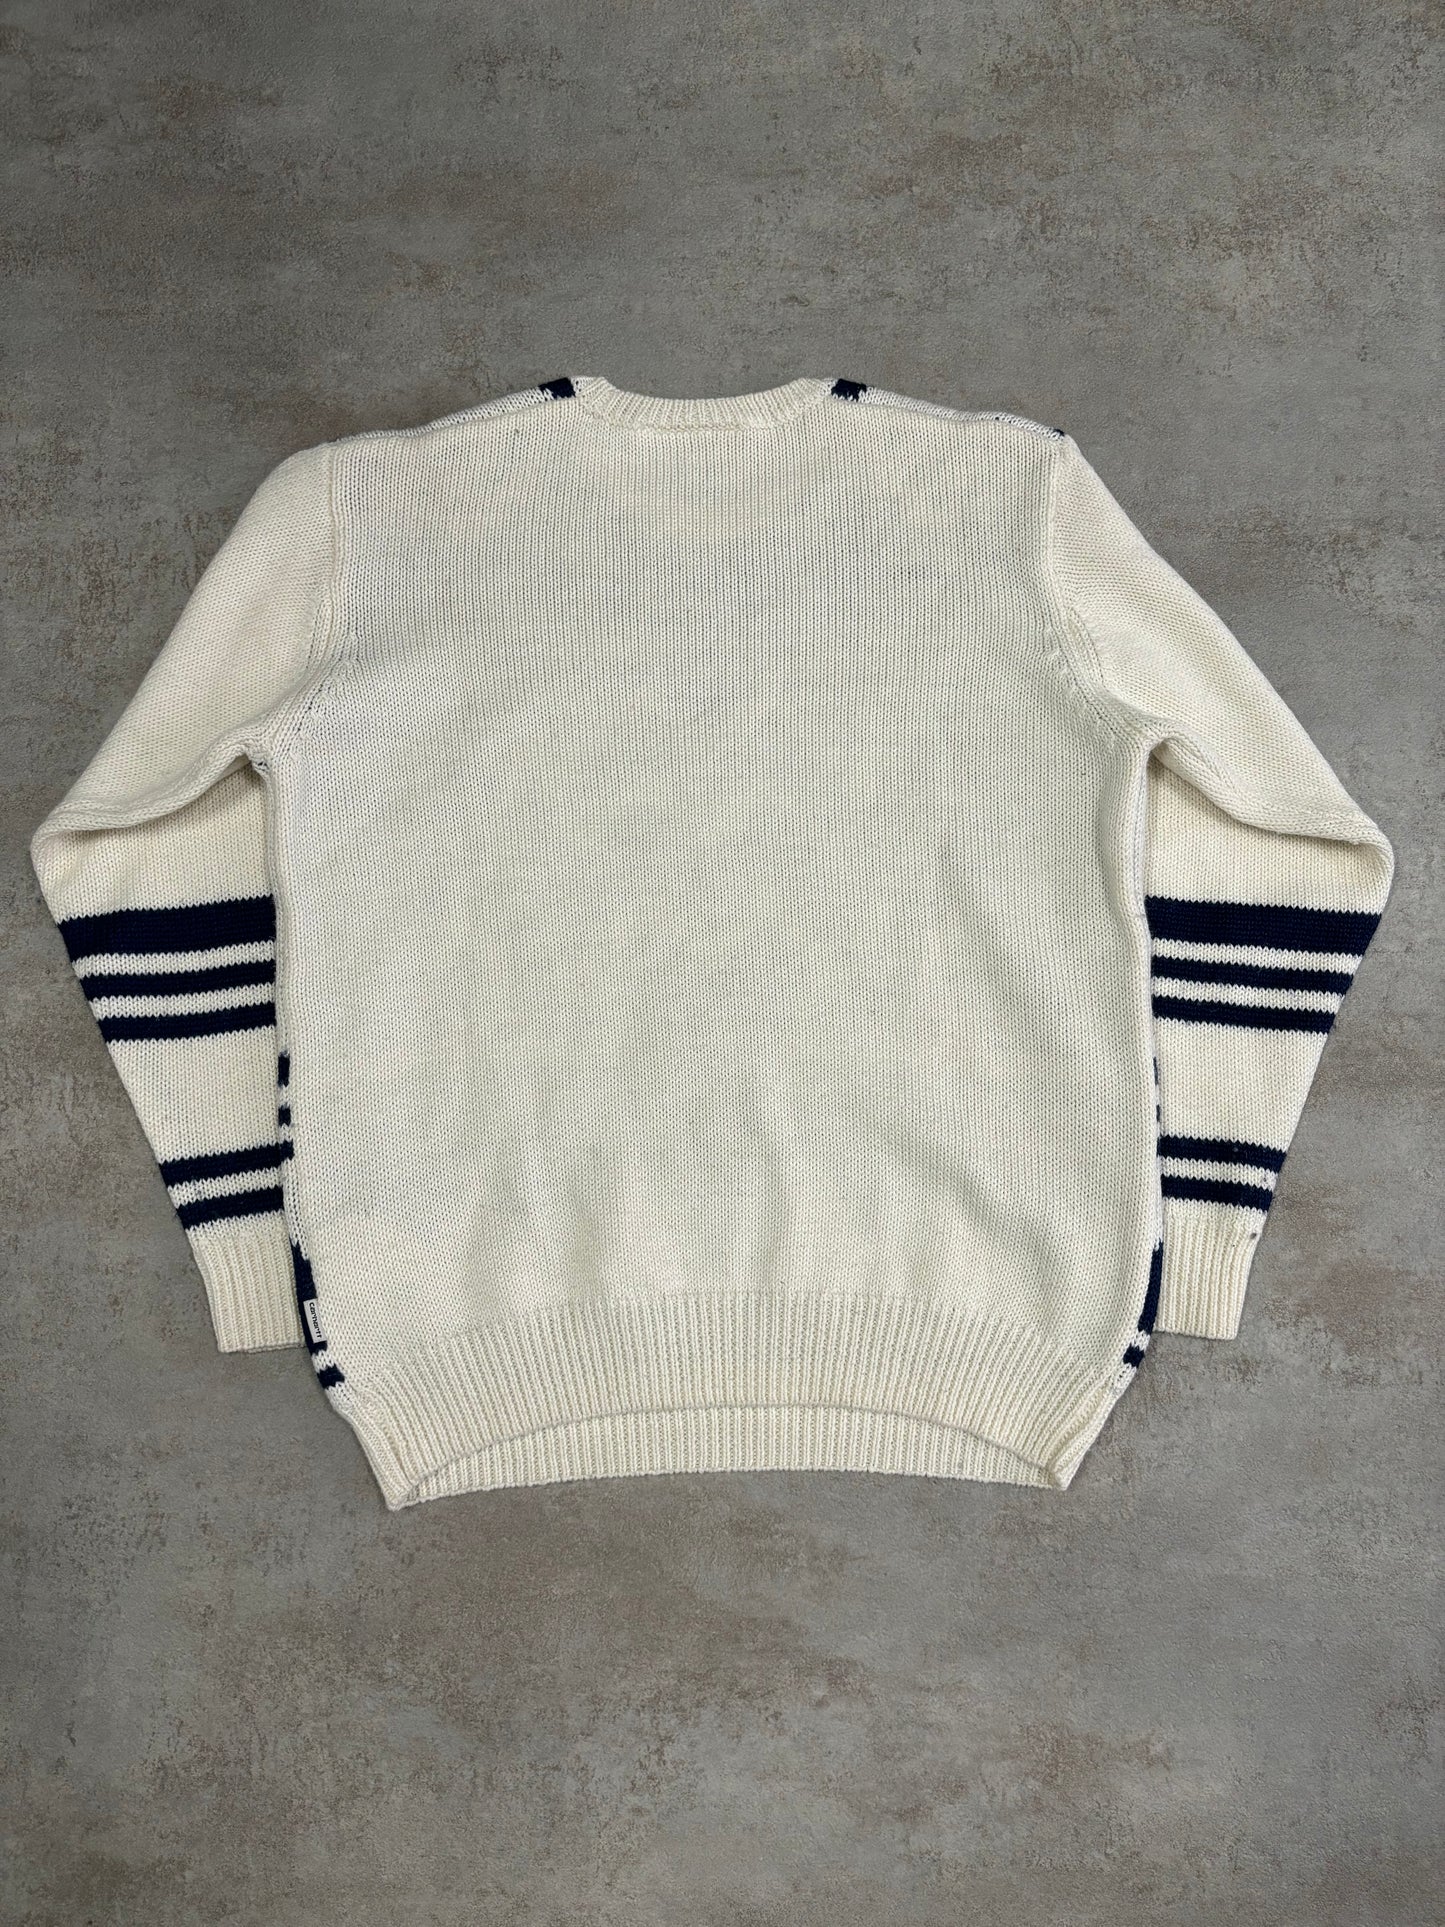 Carhartt WIP Graphic Sweater - M